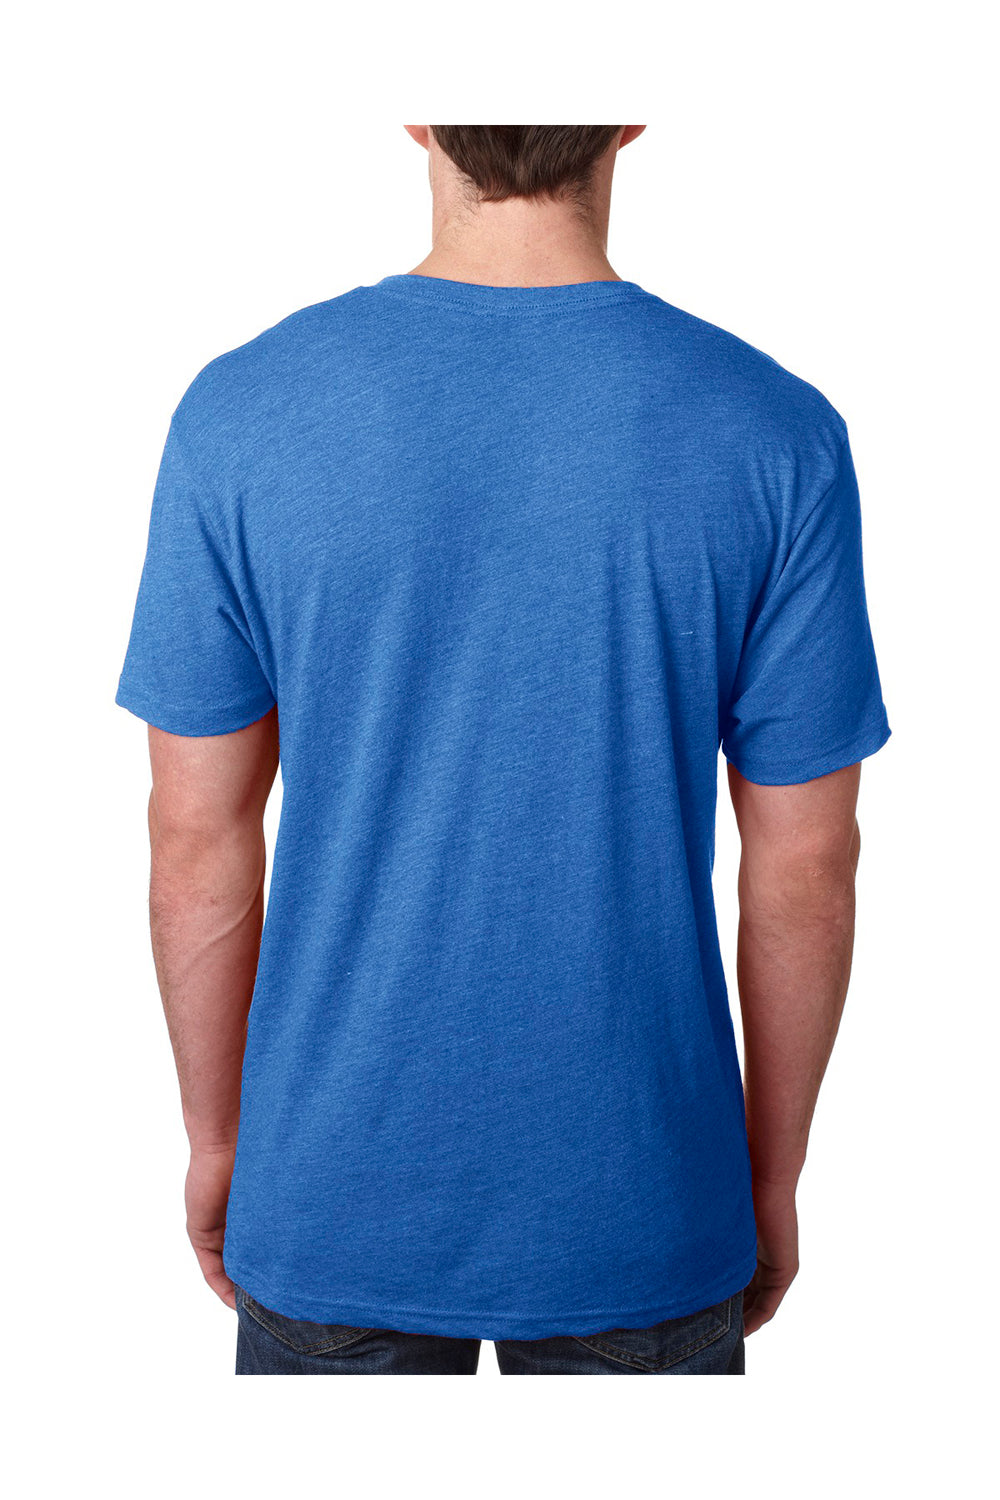 Next Level 6040 Mens Jersey Short Sleeve V-Neck T-Shirt Royal Blue Back